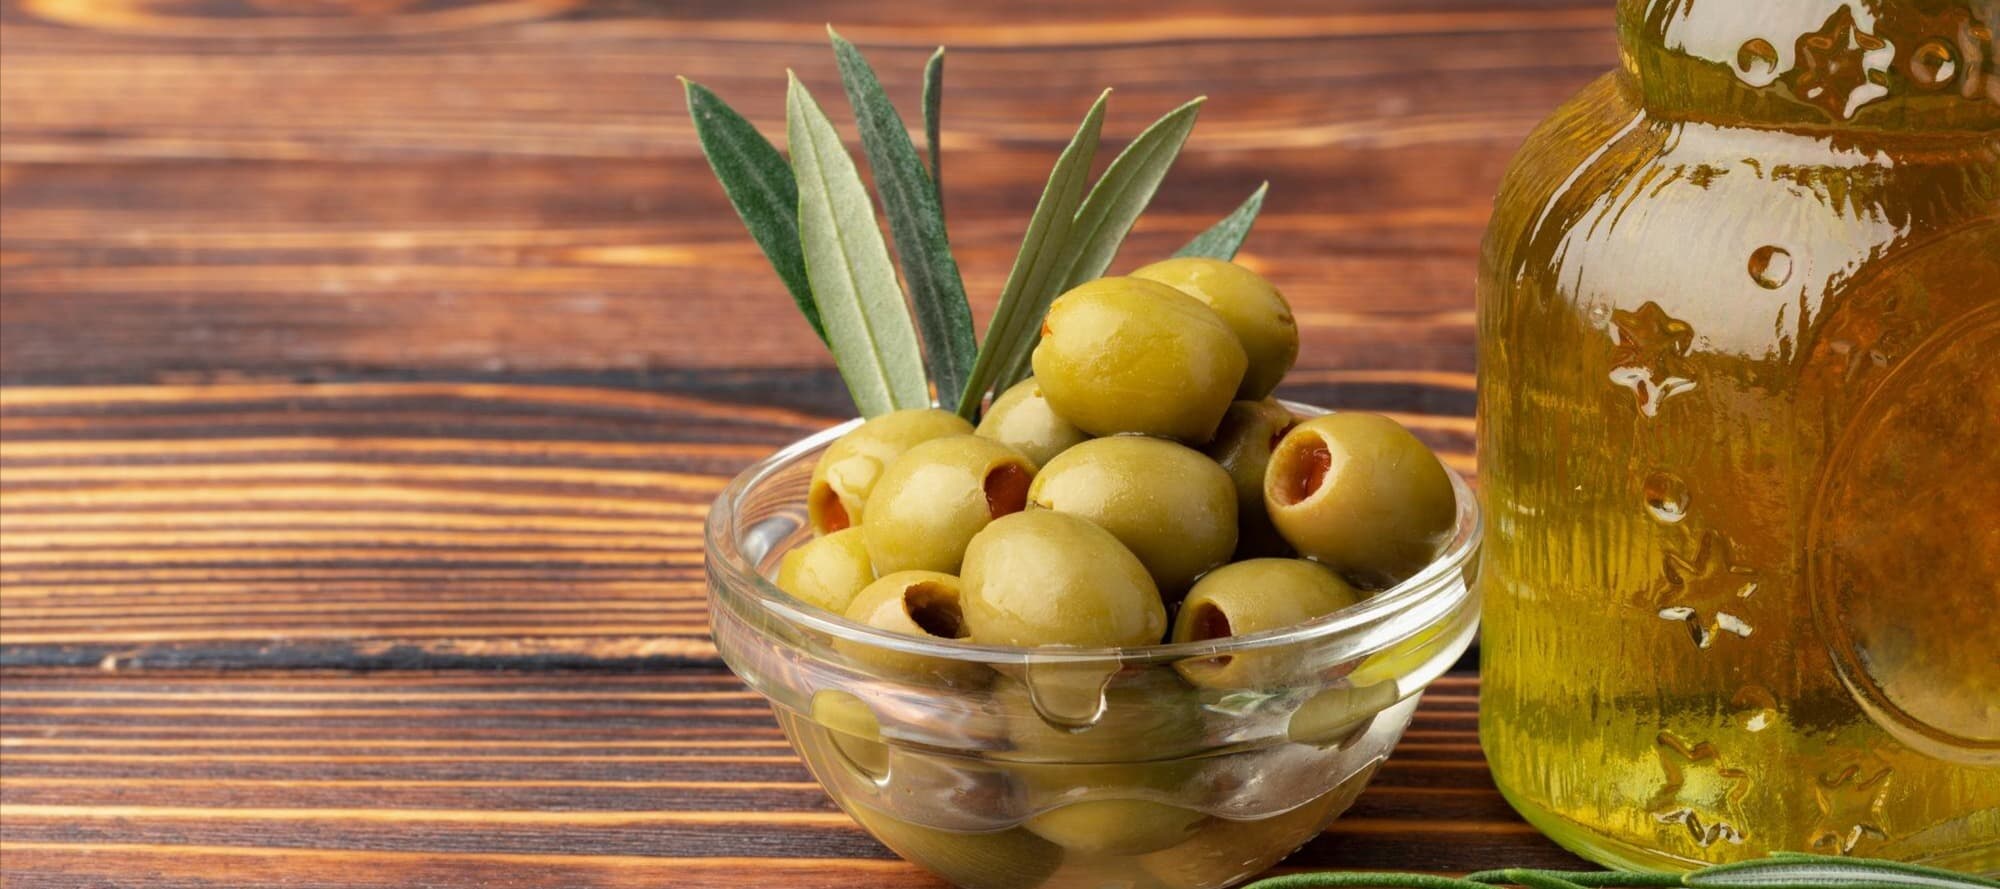 Фото новости: "Турция приостановила экспорт оливкового масла до ноября"